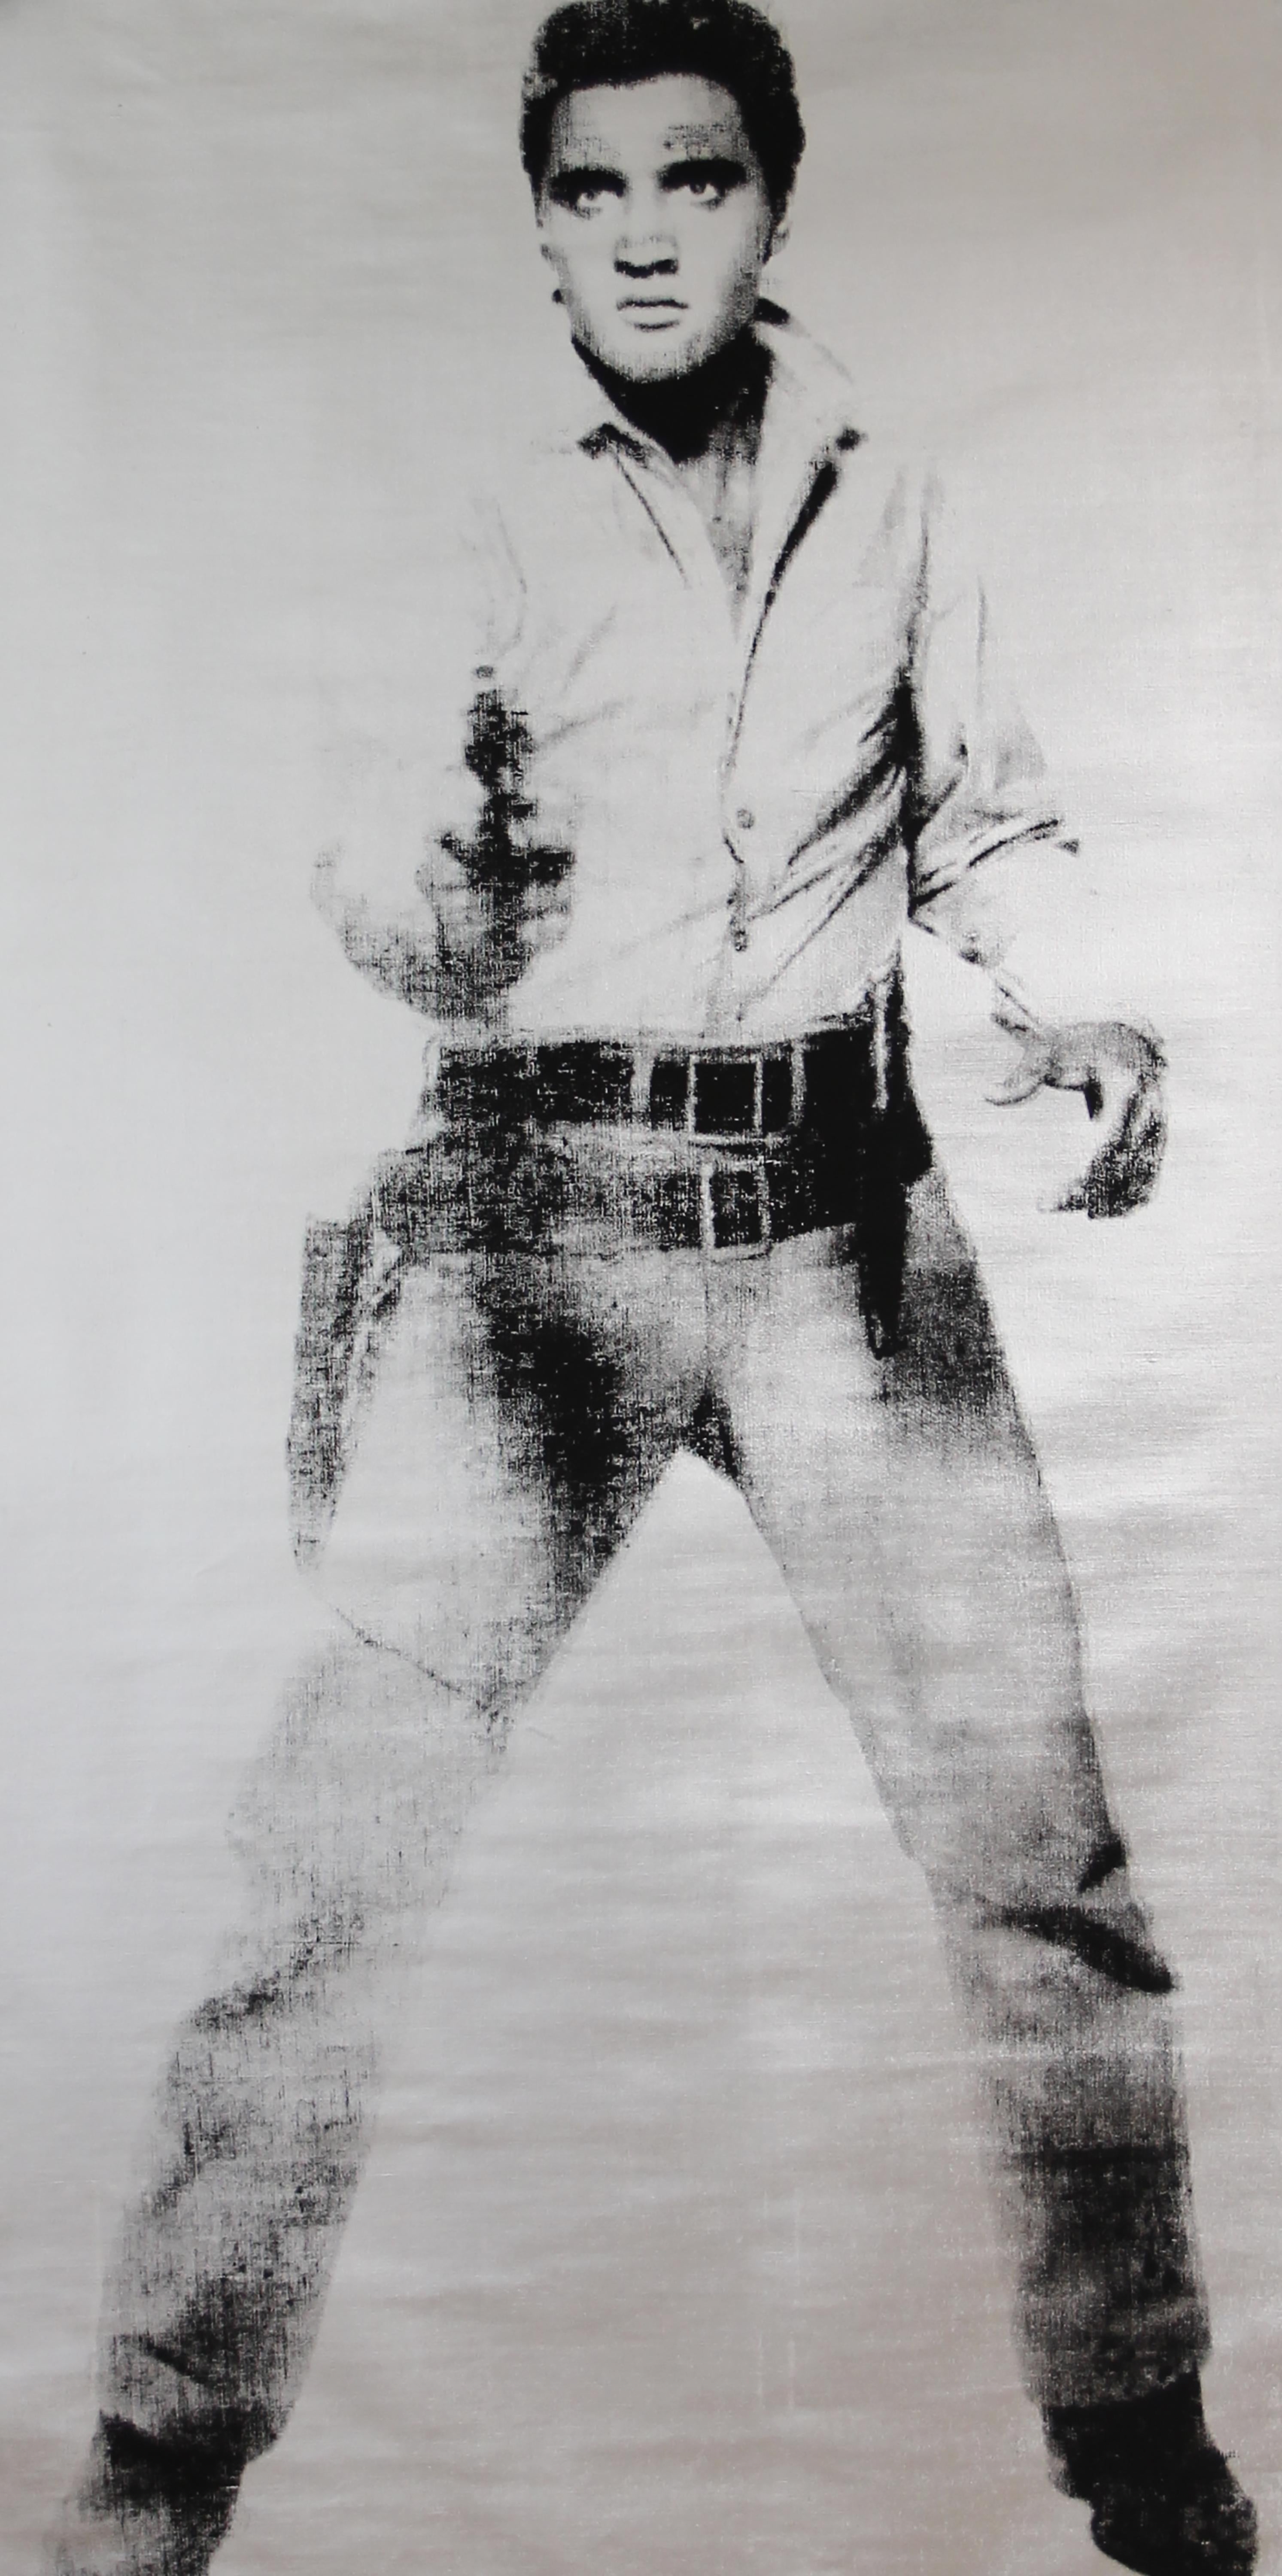 "Elvis", Denied Andy Warhol Silver & Black Pop Art Painting by Charles Lutz